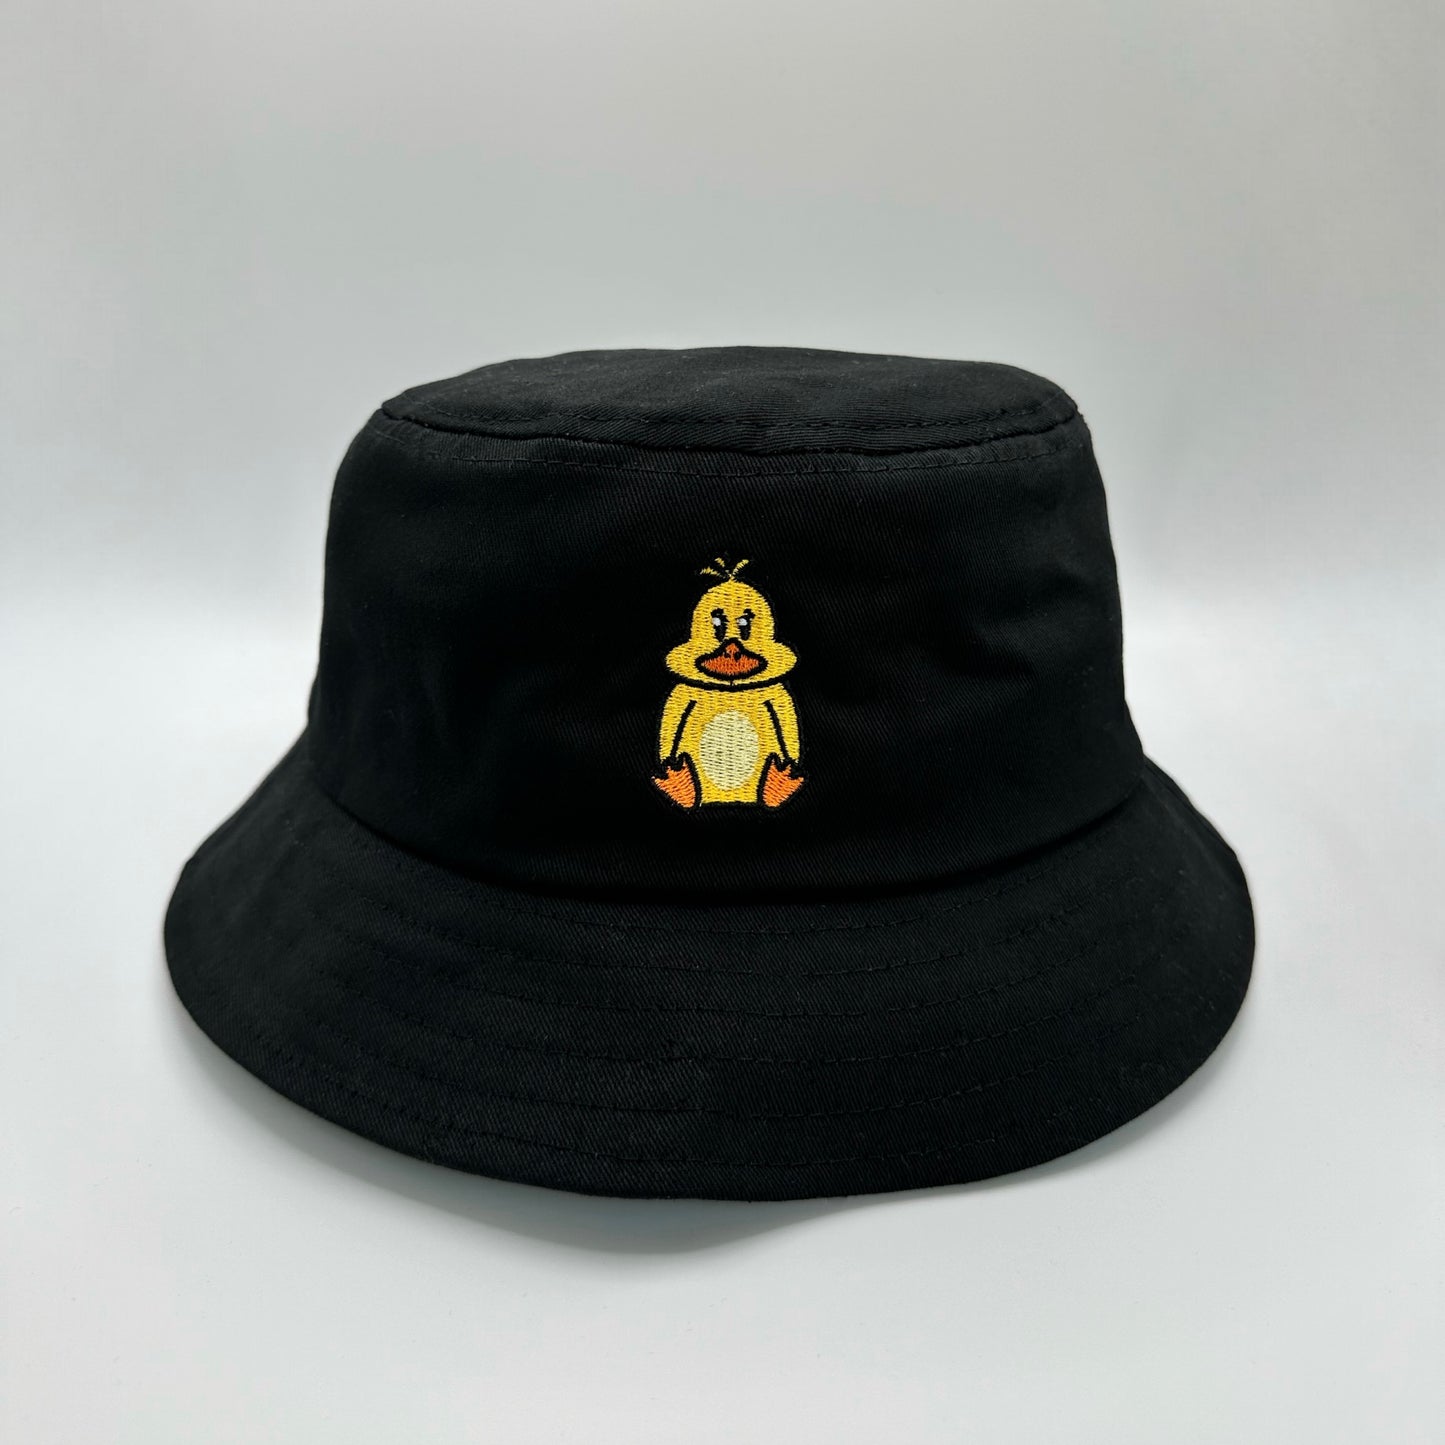 The Official Duckett's Bucket Hat - Black